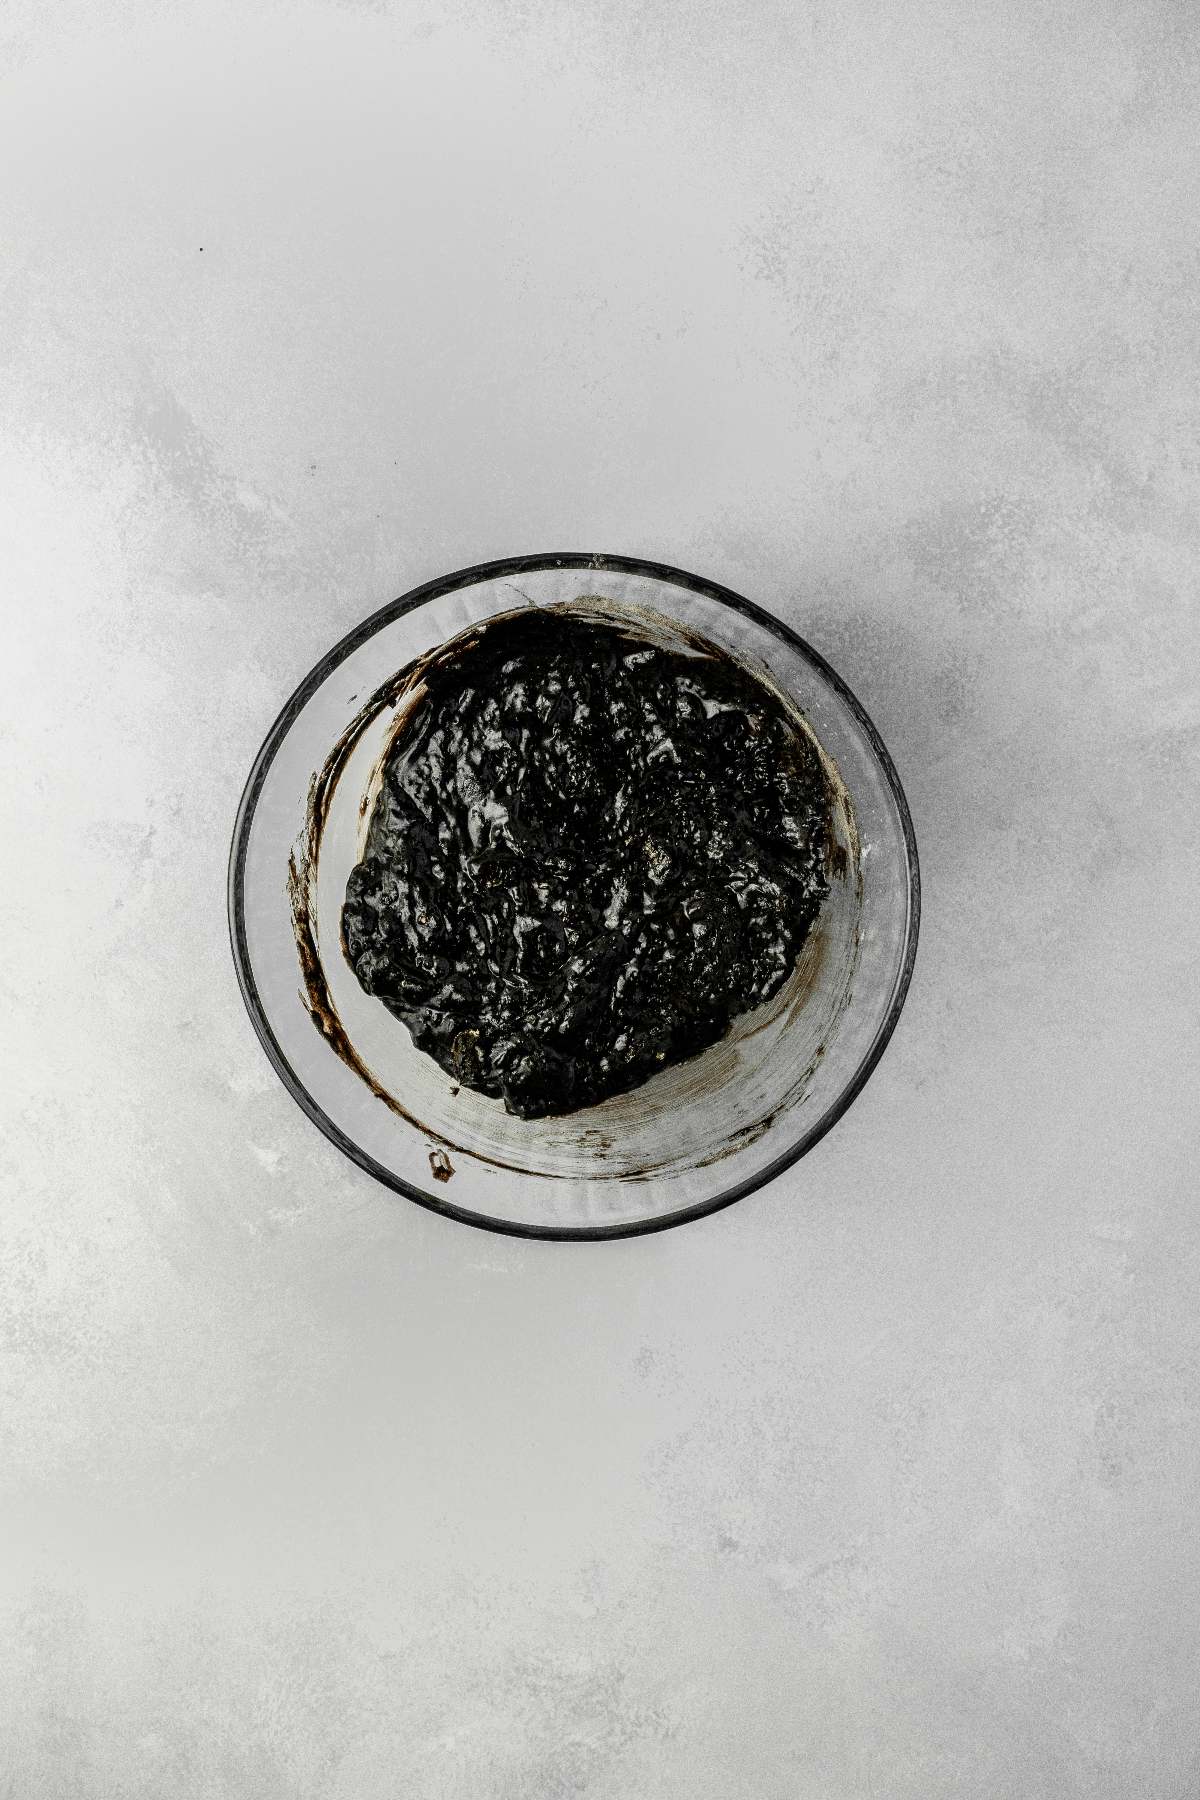 Black oreo donut batter in a glass bowl.